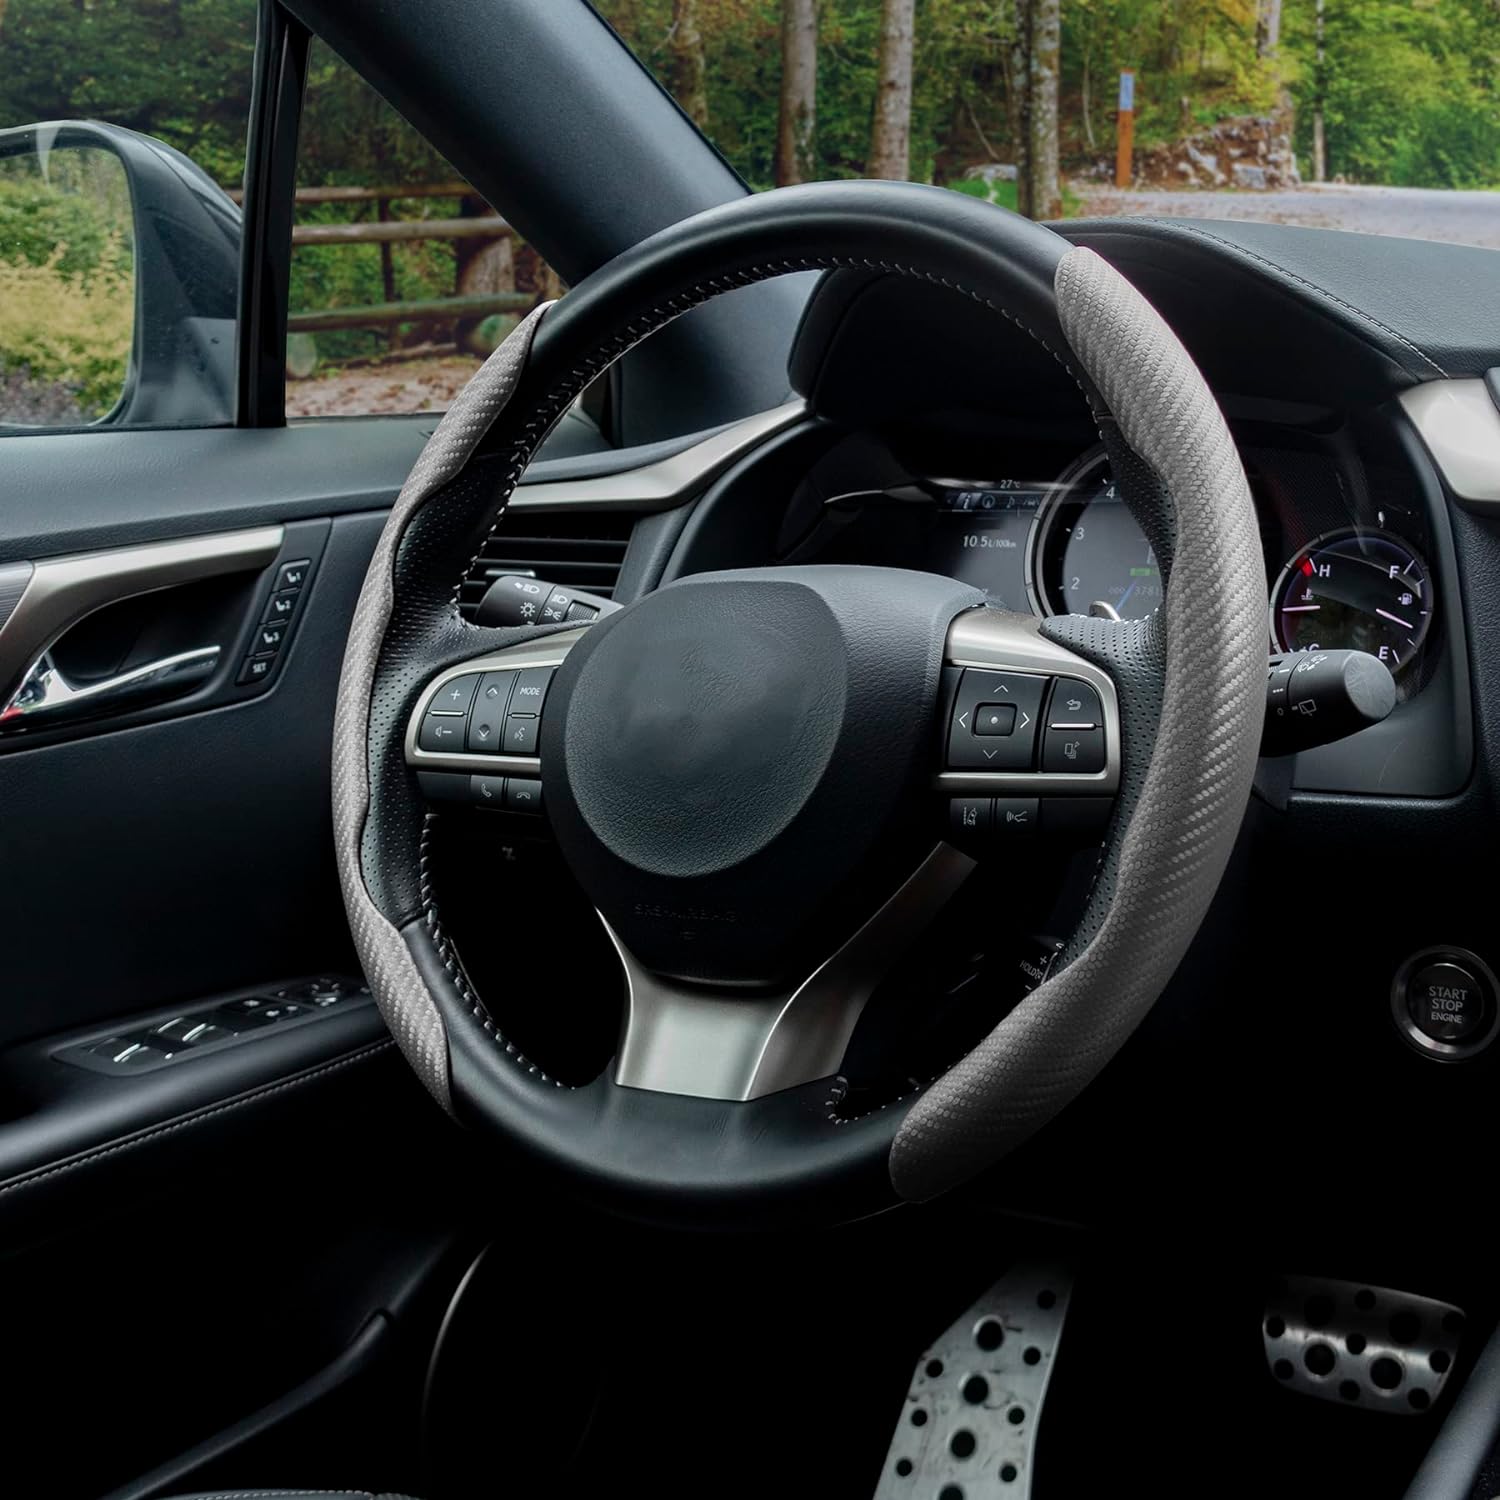 Car Carbon Fiber Anti-Skid Steering Wheel Cover